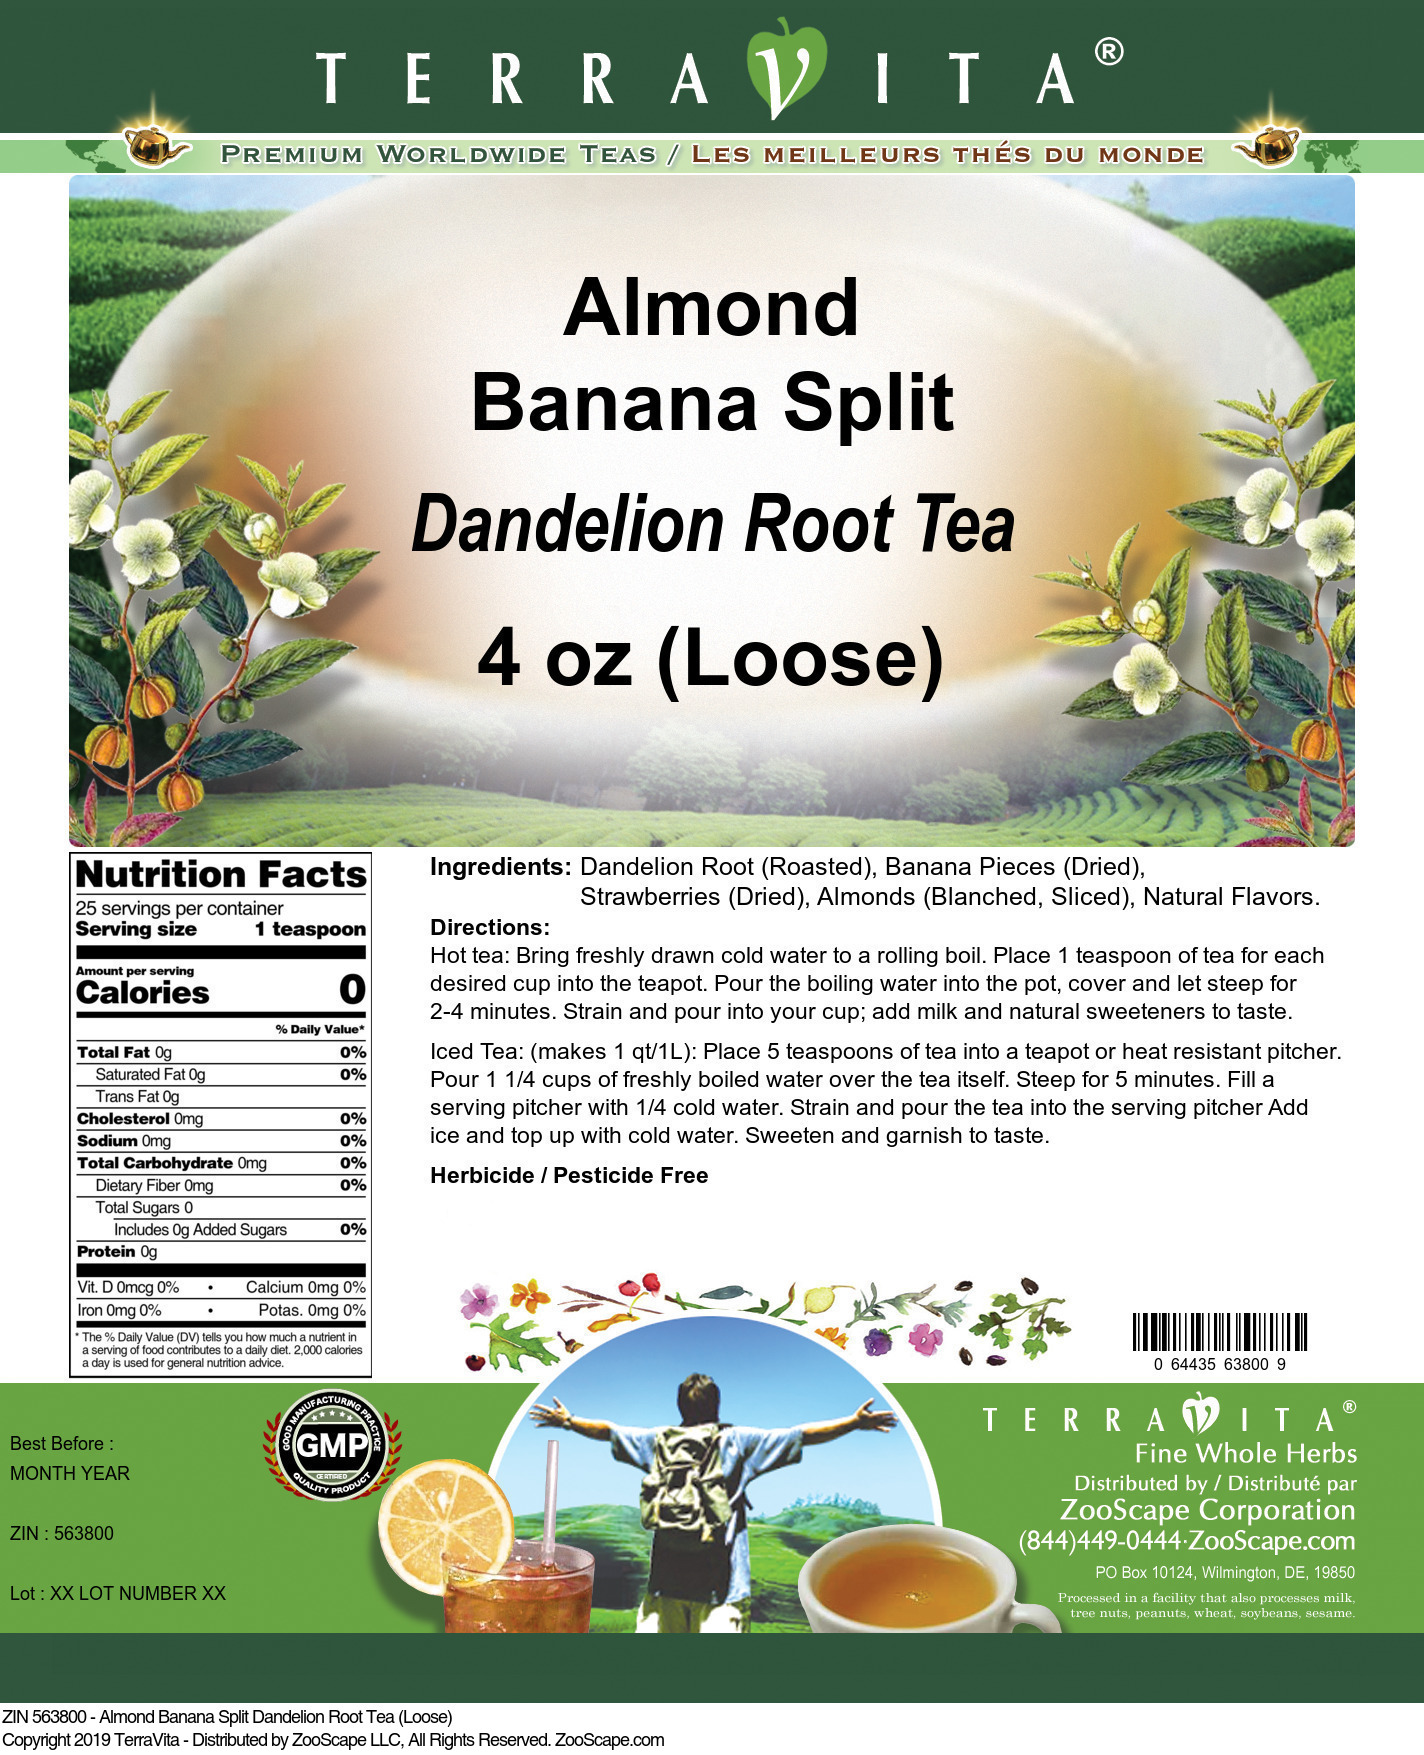 Almond Banana Split Dandelion Root Tea (Loose) - Label